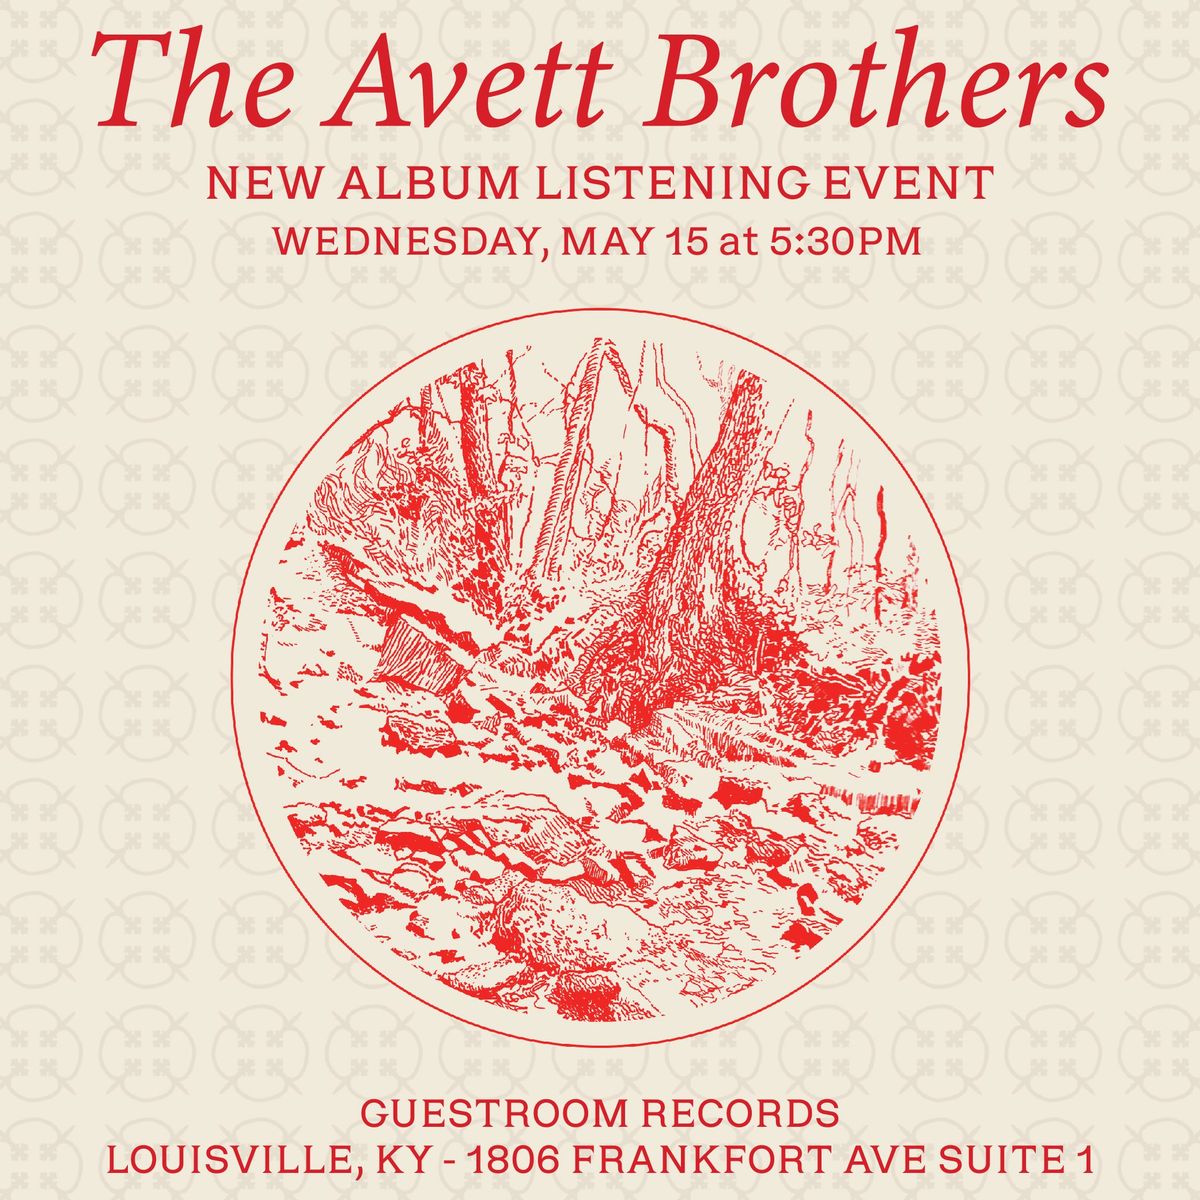 The Avett Brothers Listening Event